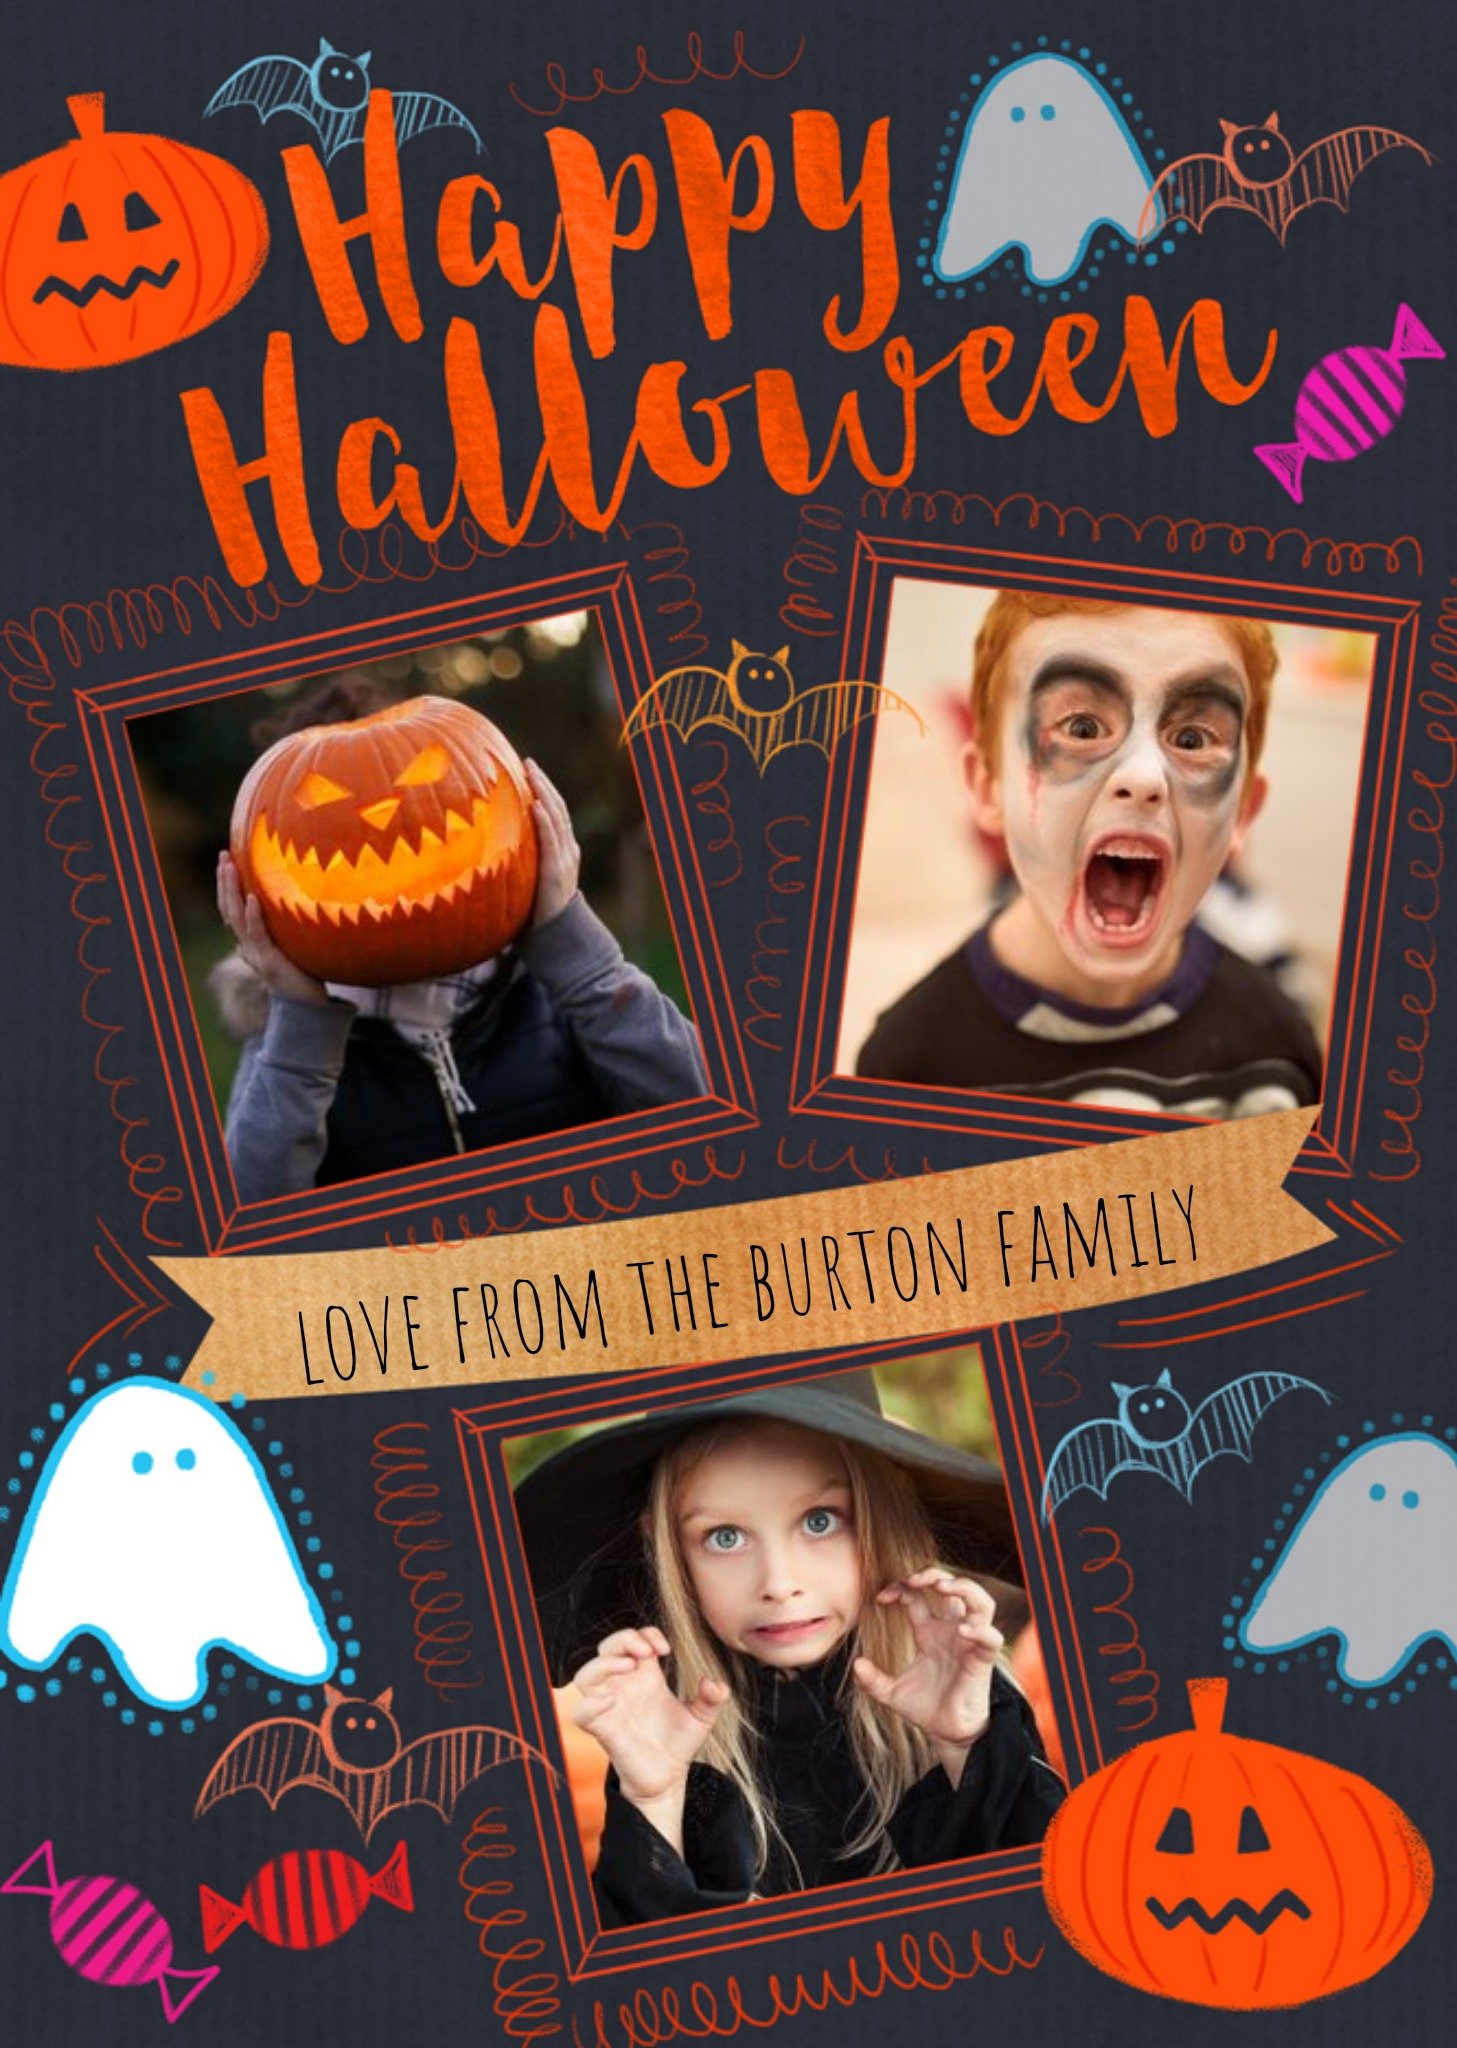 Moonpig Illustrations Of Halloween Icons Happy Halloween Photo Upload Card, Large